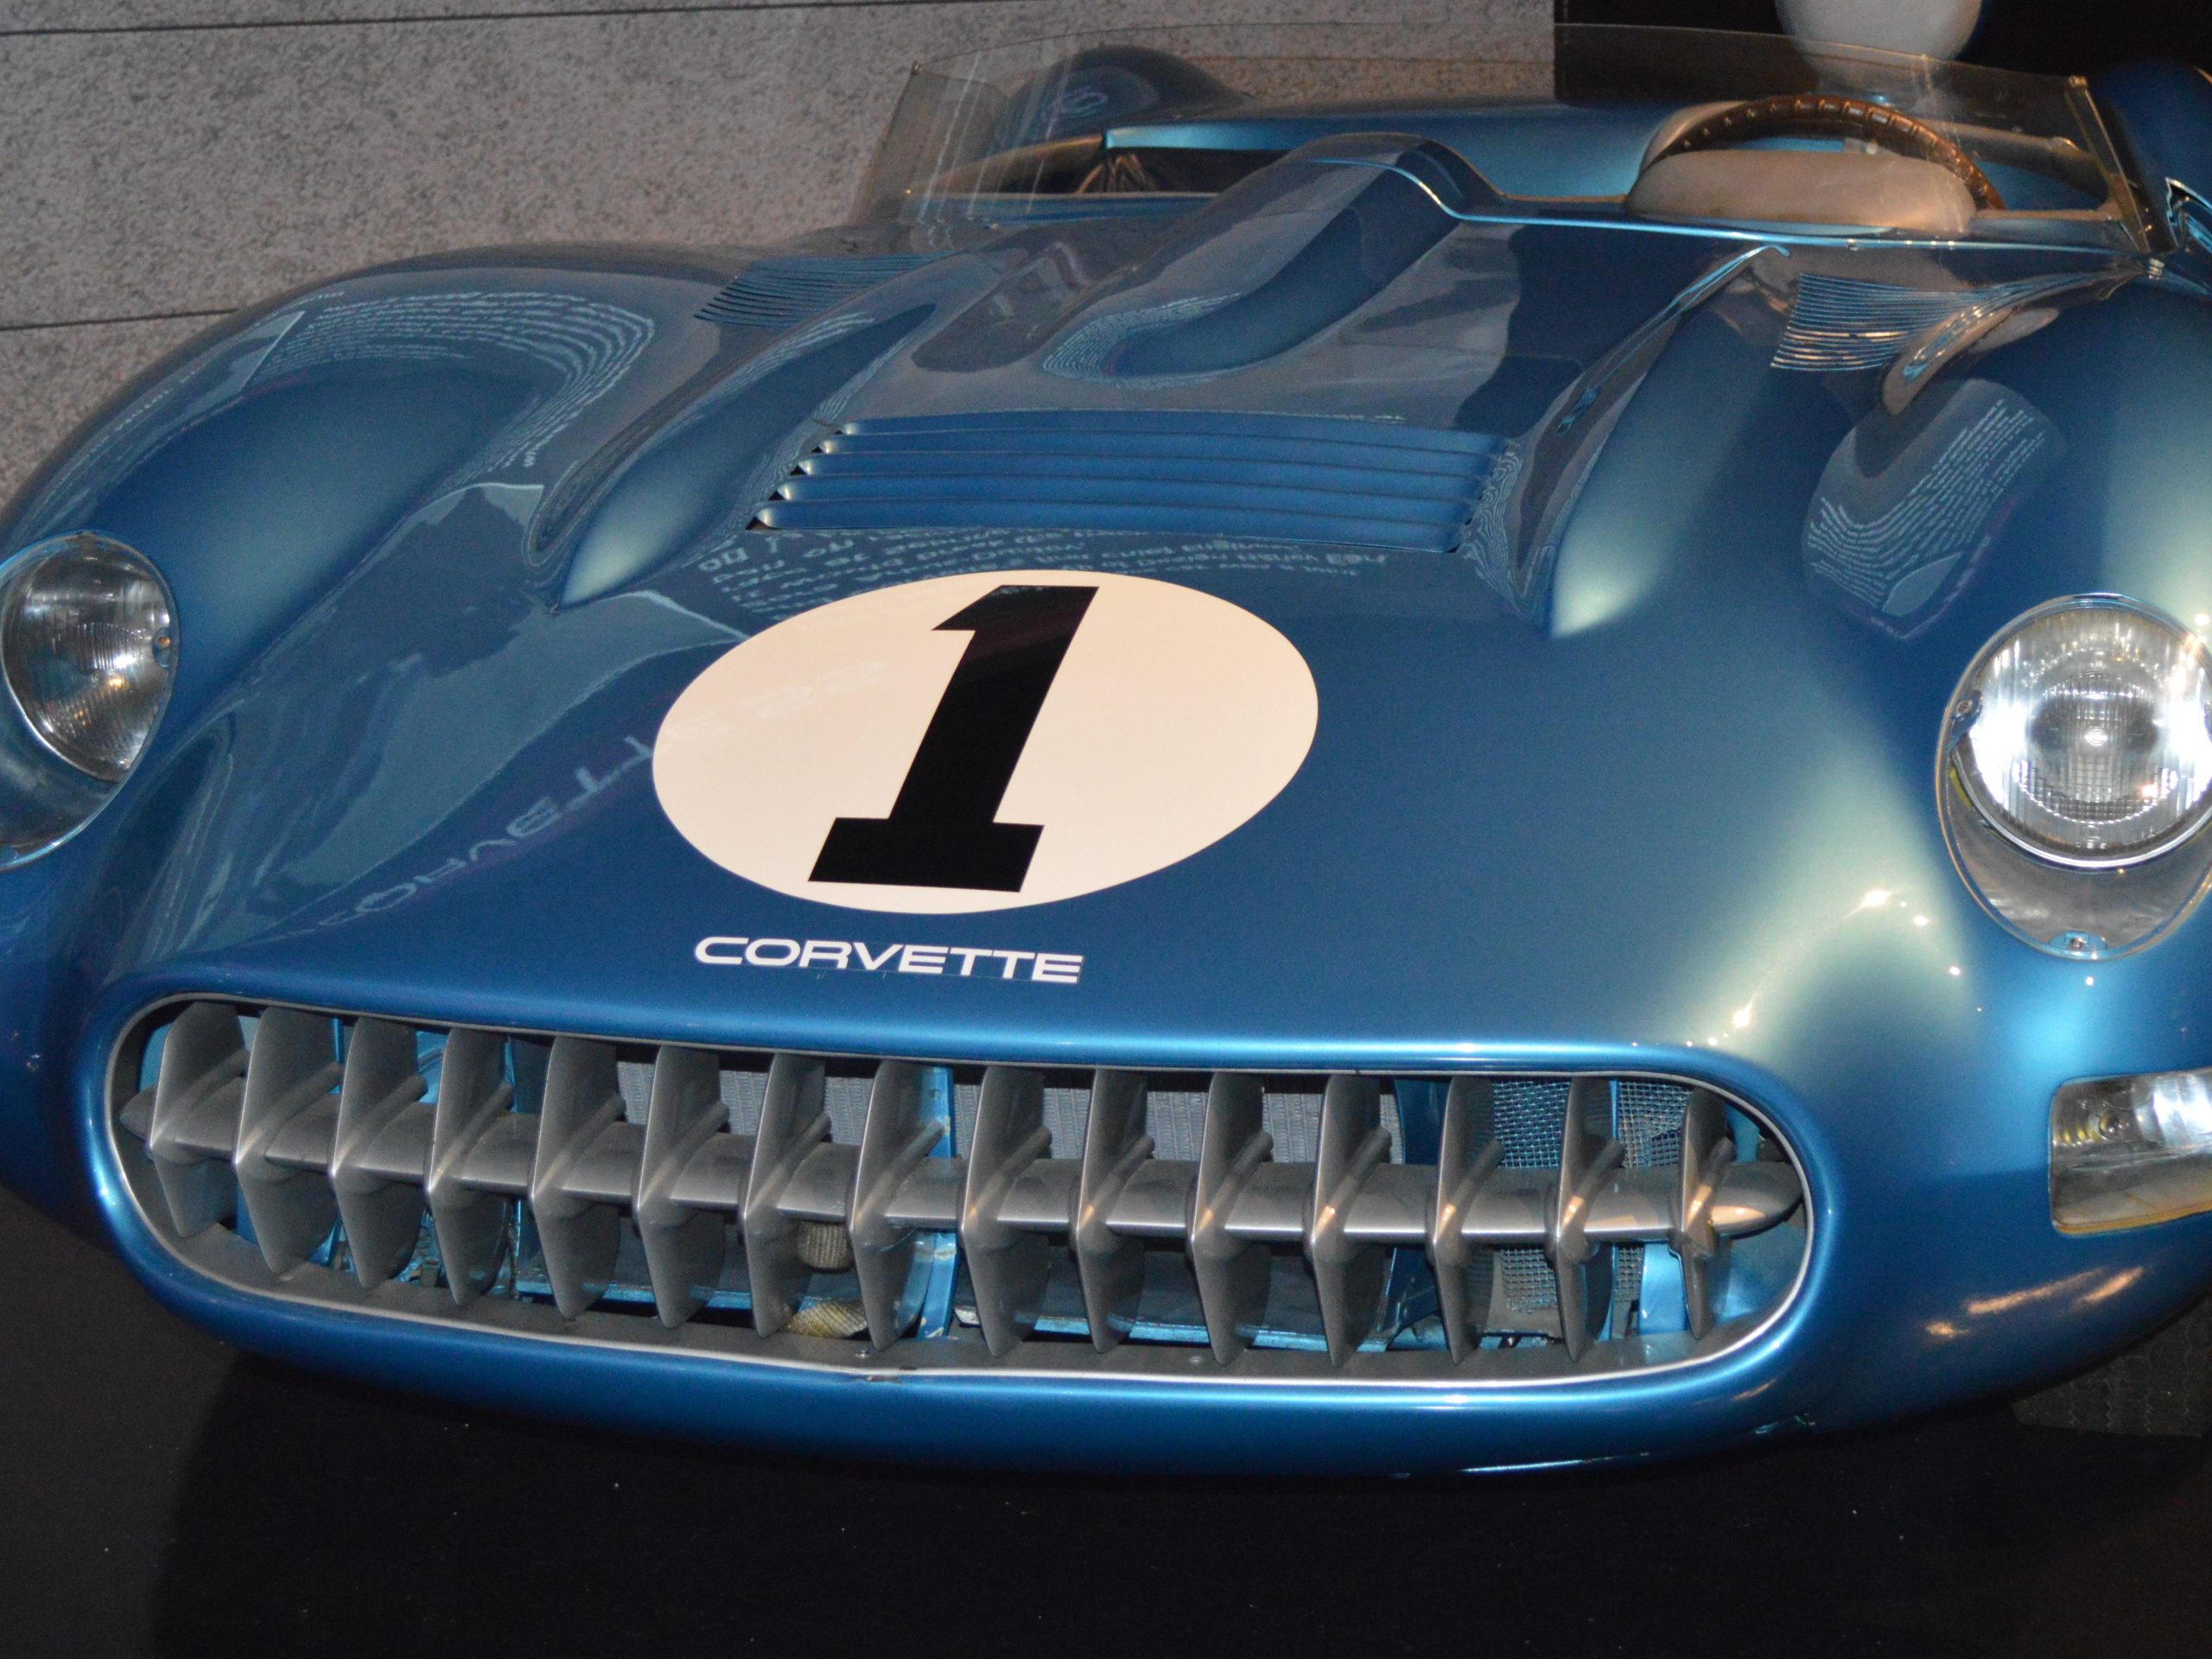 The 1957 Corvette SS Race Car (Image courtesy of Kolecki Photography.)